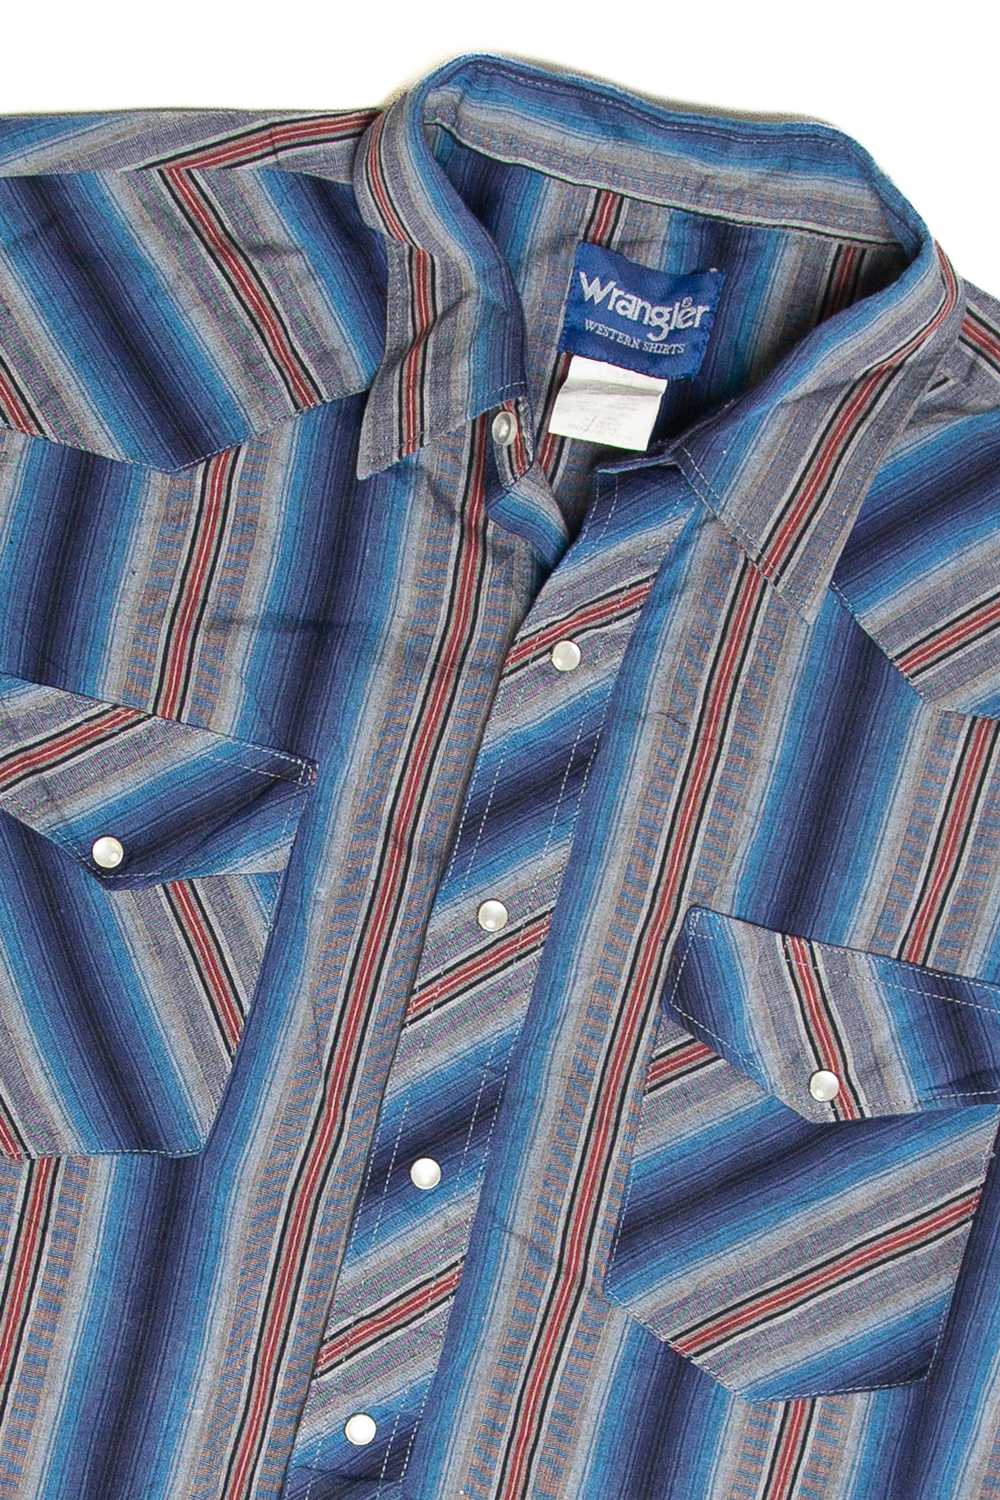 Vintage Wrangler Stripe Button Up T-Shirt - image 2